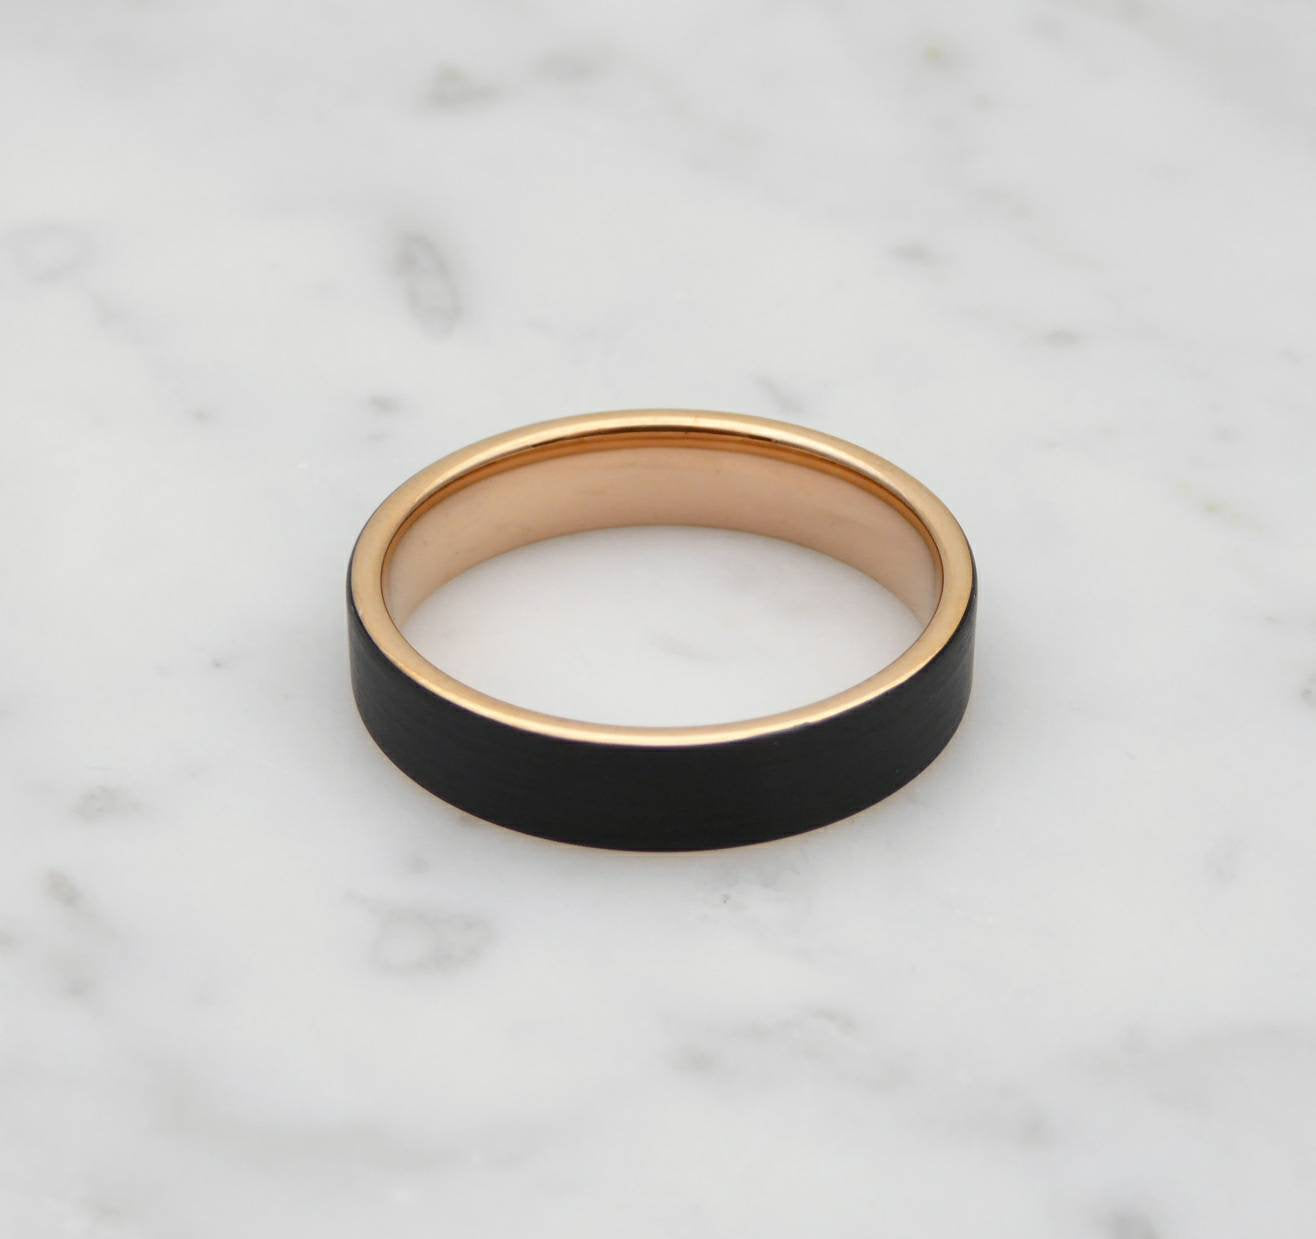 5mm Black Brushed titanium & 18k rose gold wedding ring band for men and women